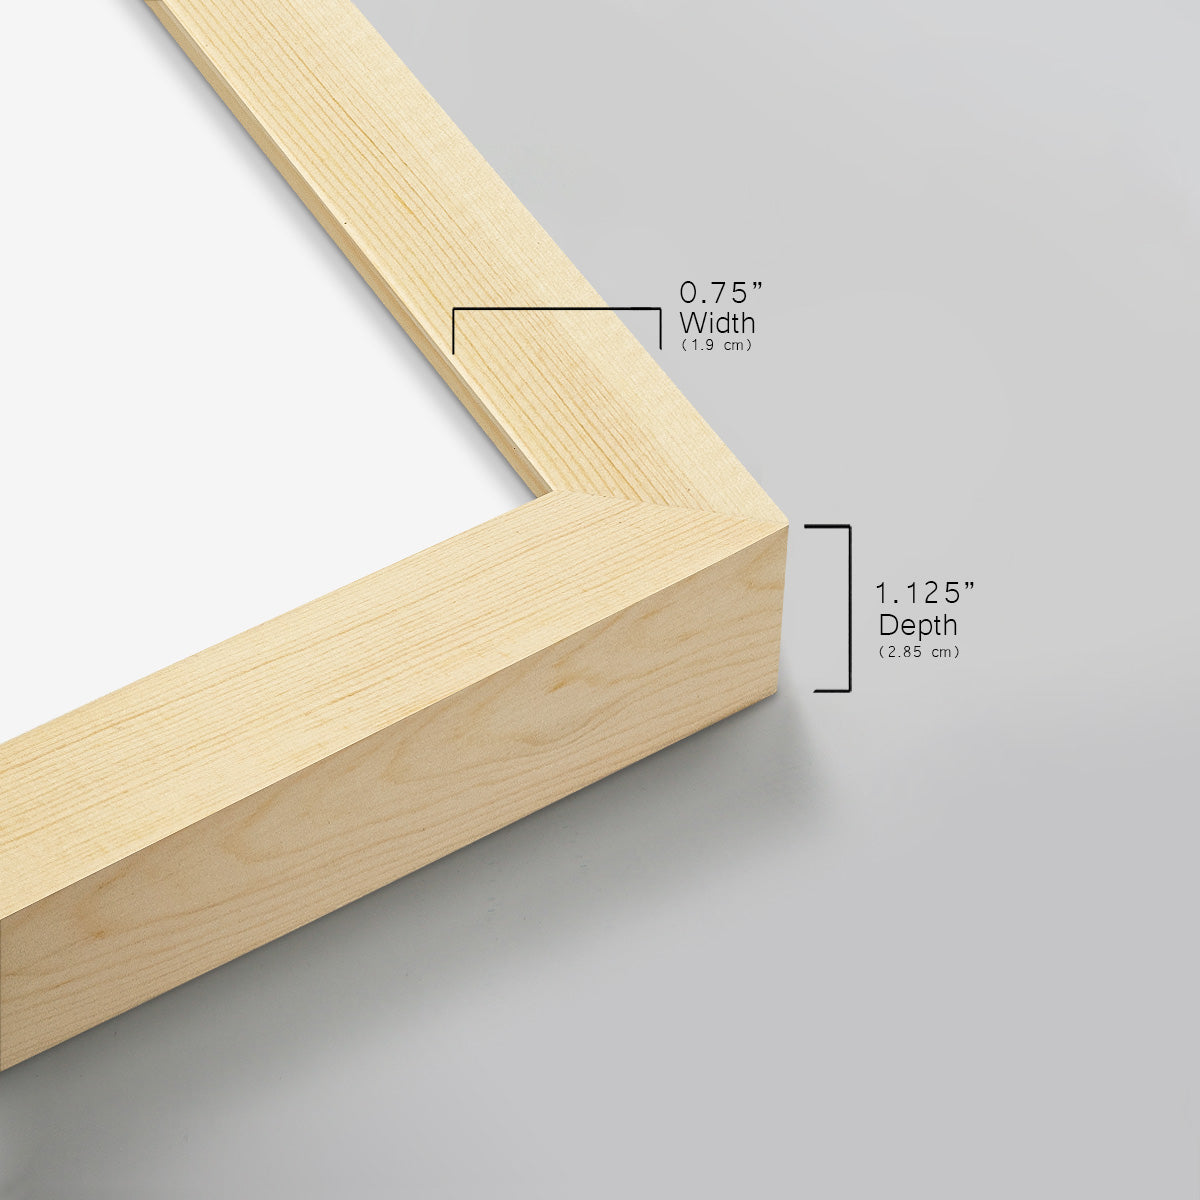 Dunes II- Premium Framed Print Double Matboard